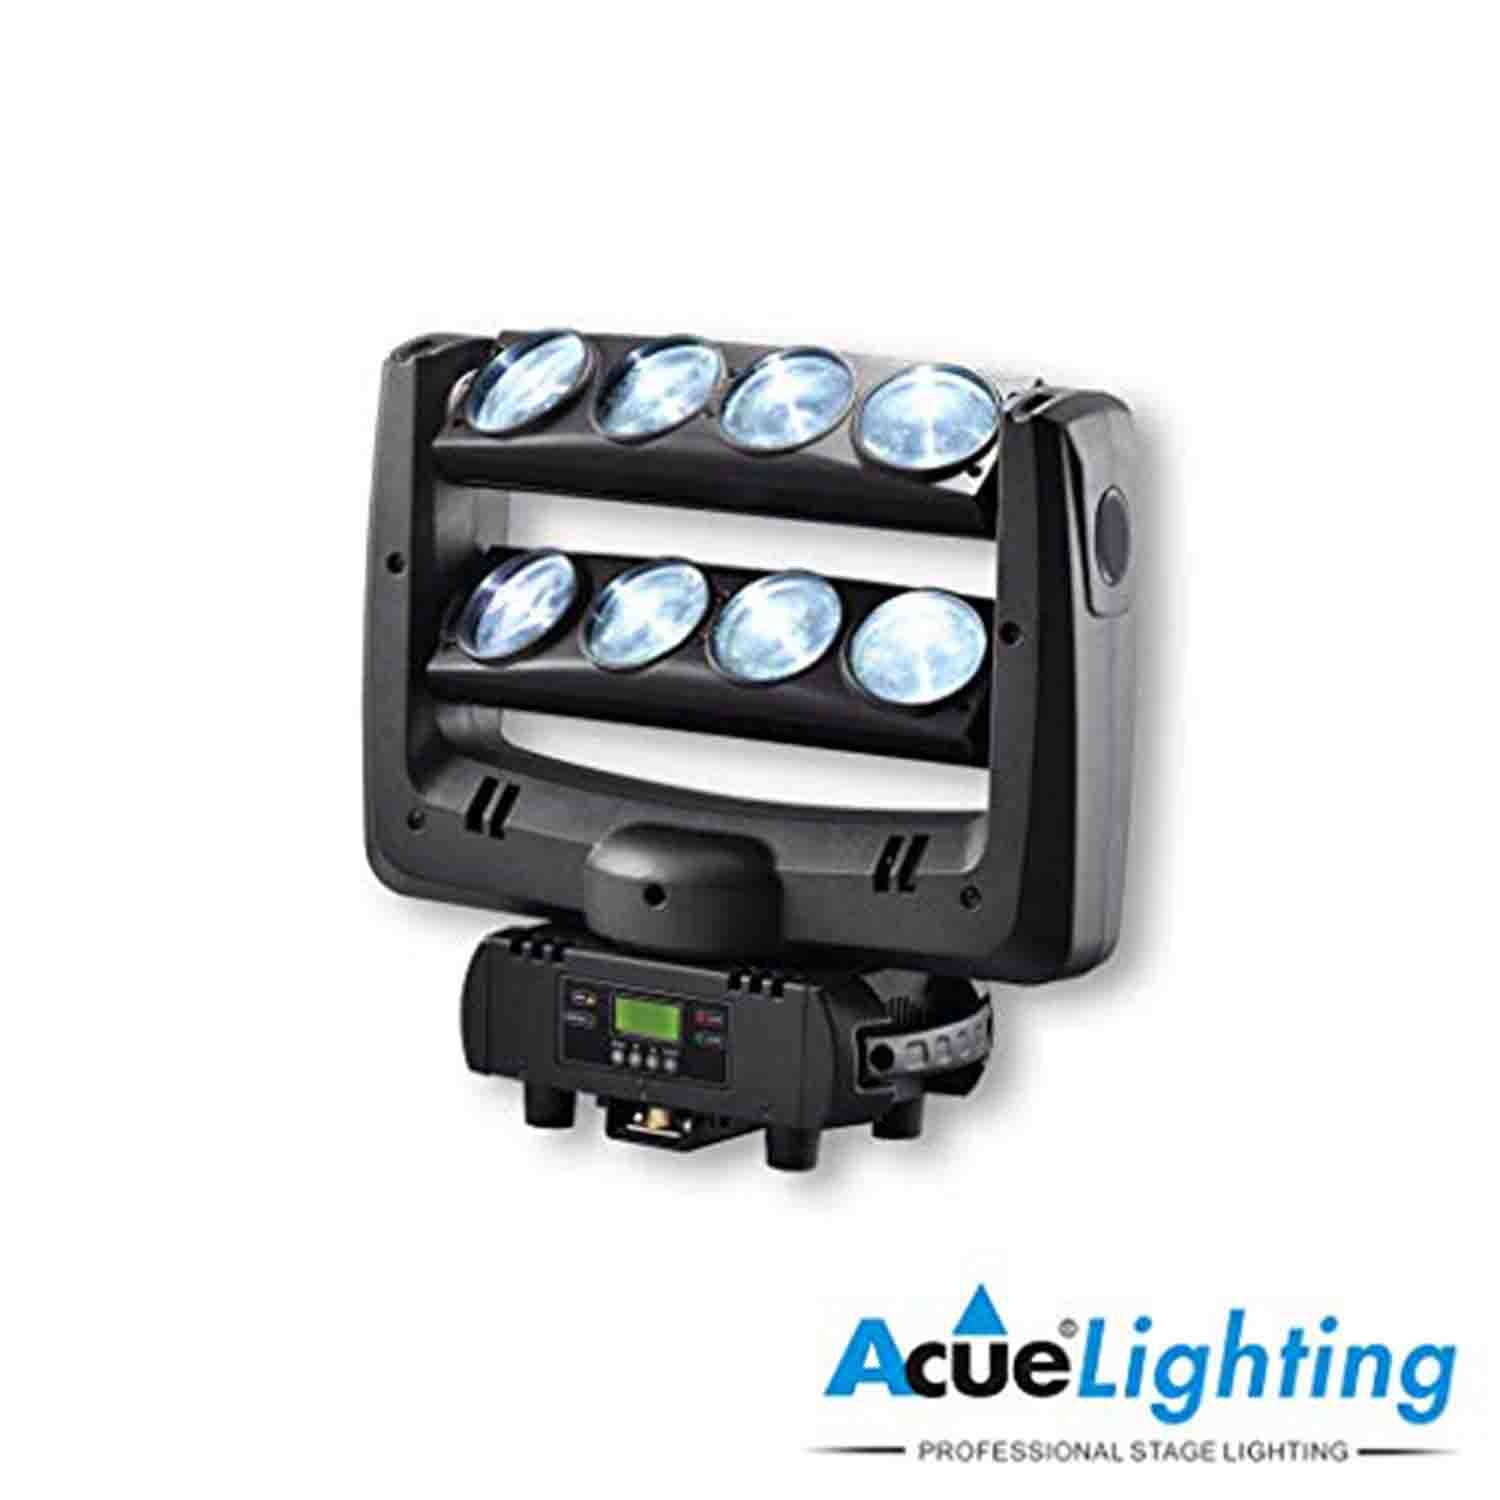 Acue Lighting Spider II LED Moving Head with 2 Arm RGB Lights - Hollywood DJ